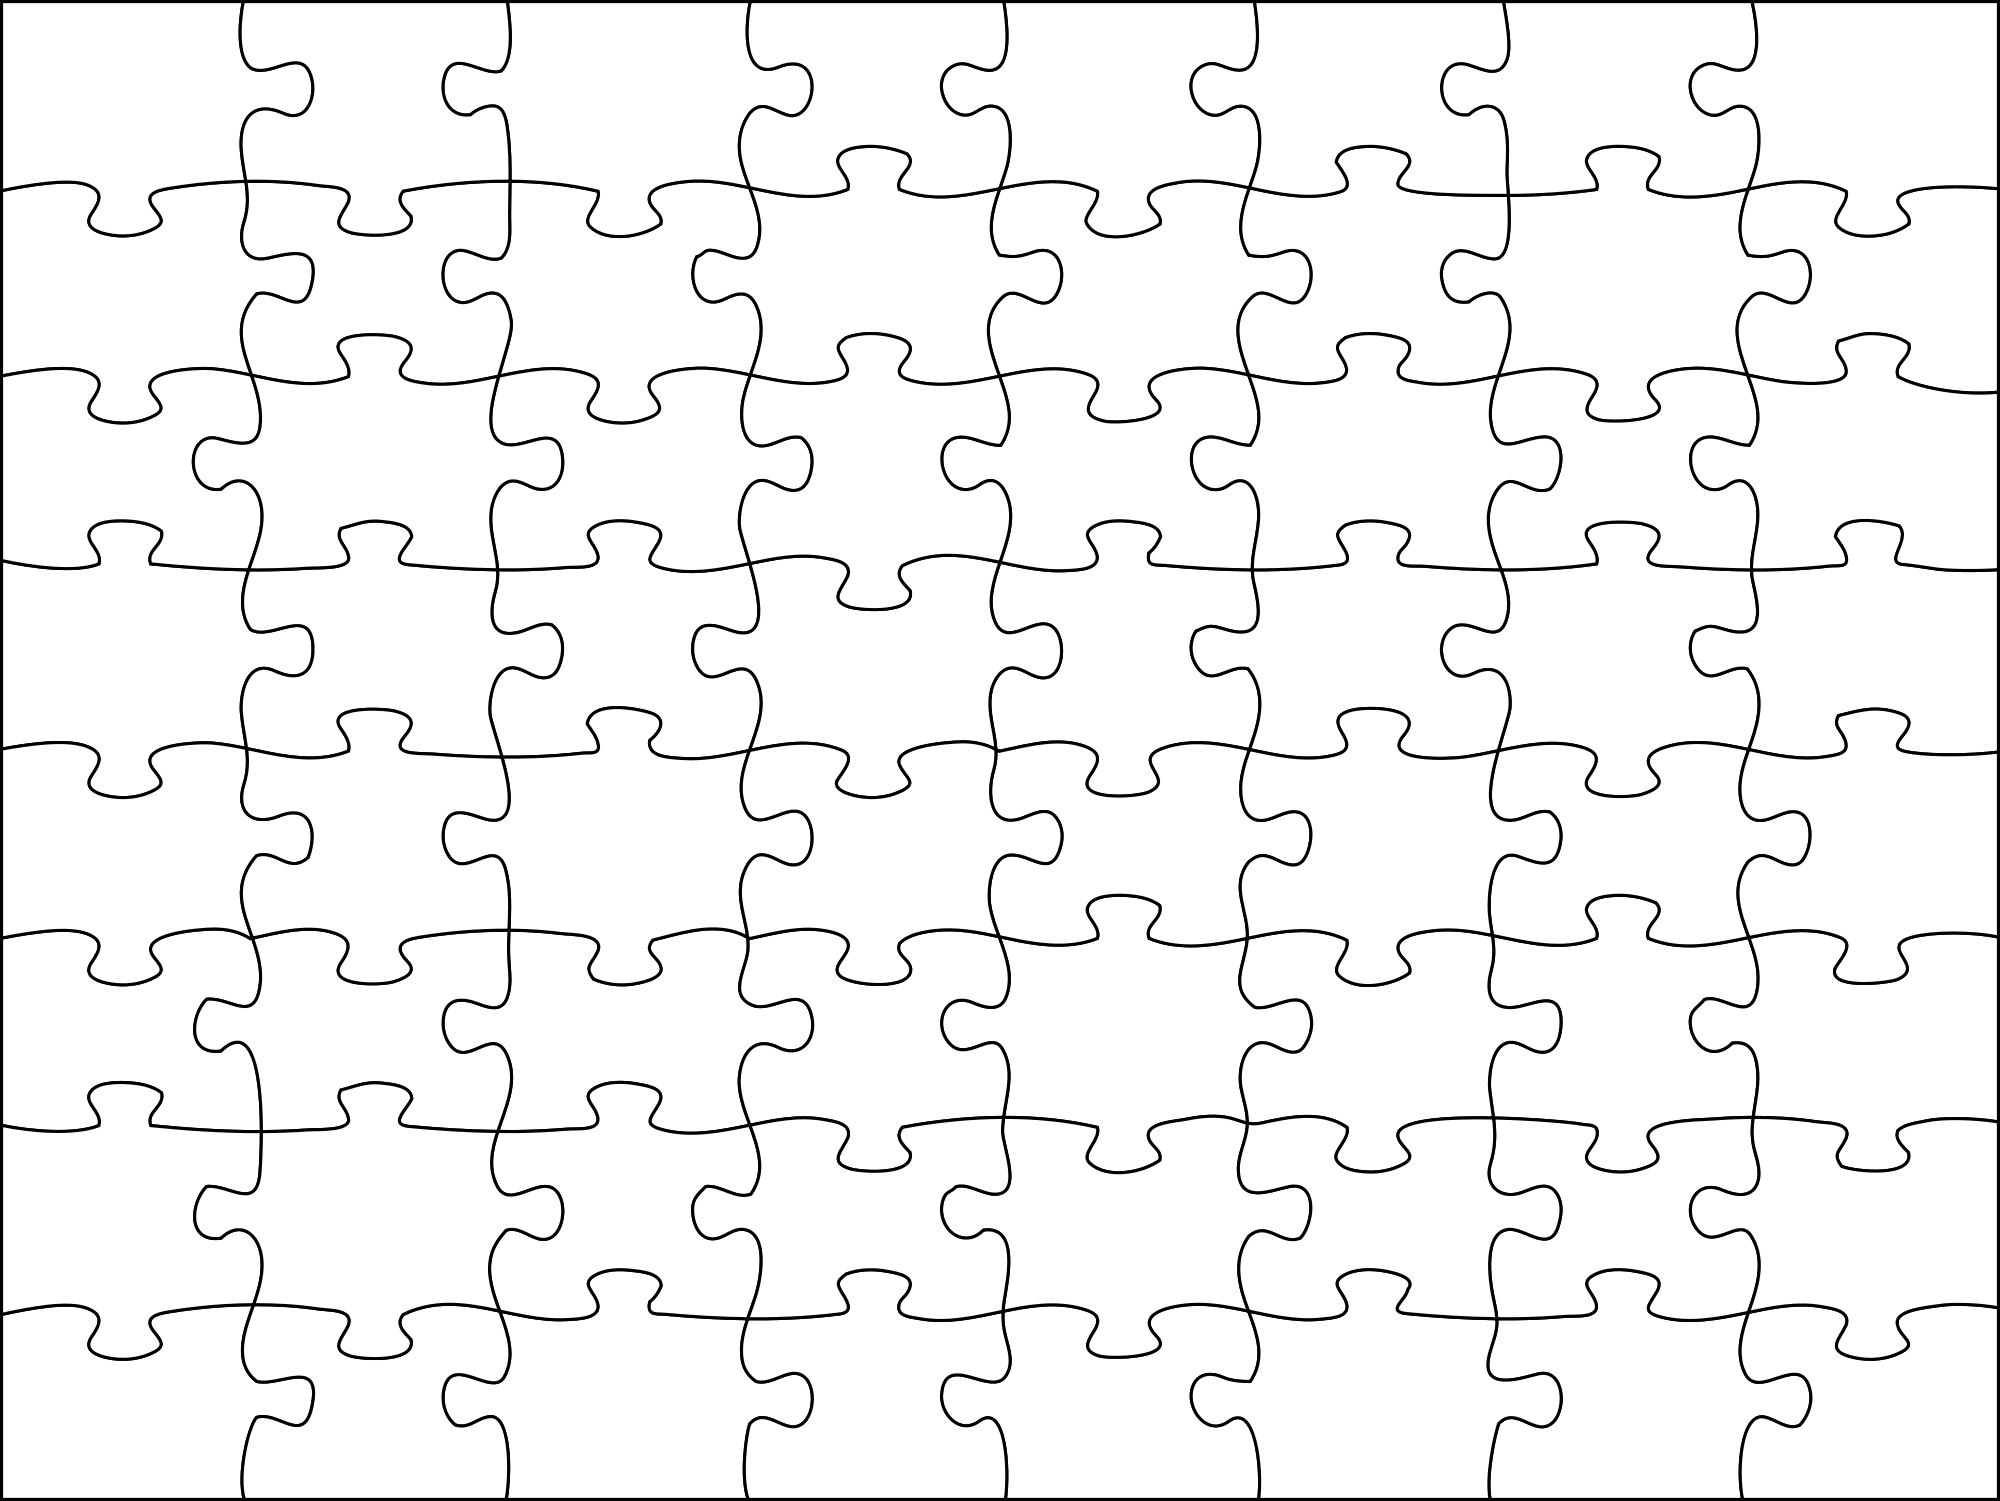 File:Jigsaw Puzzle.svg - Wikimedia Commons